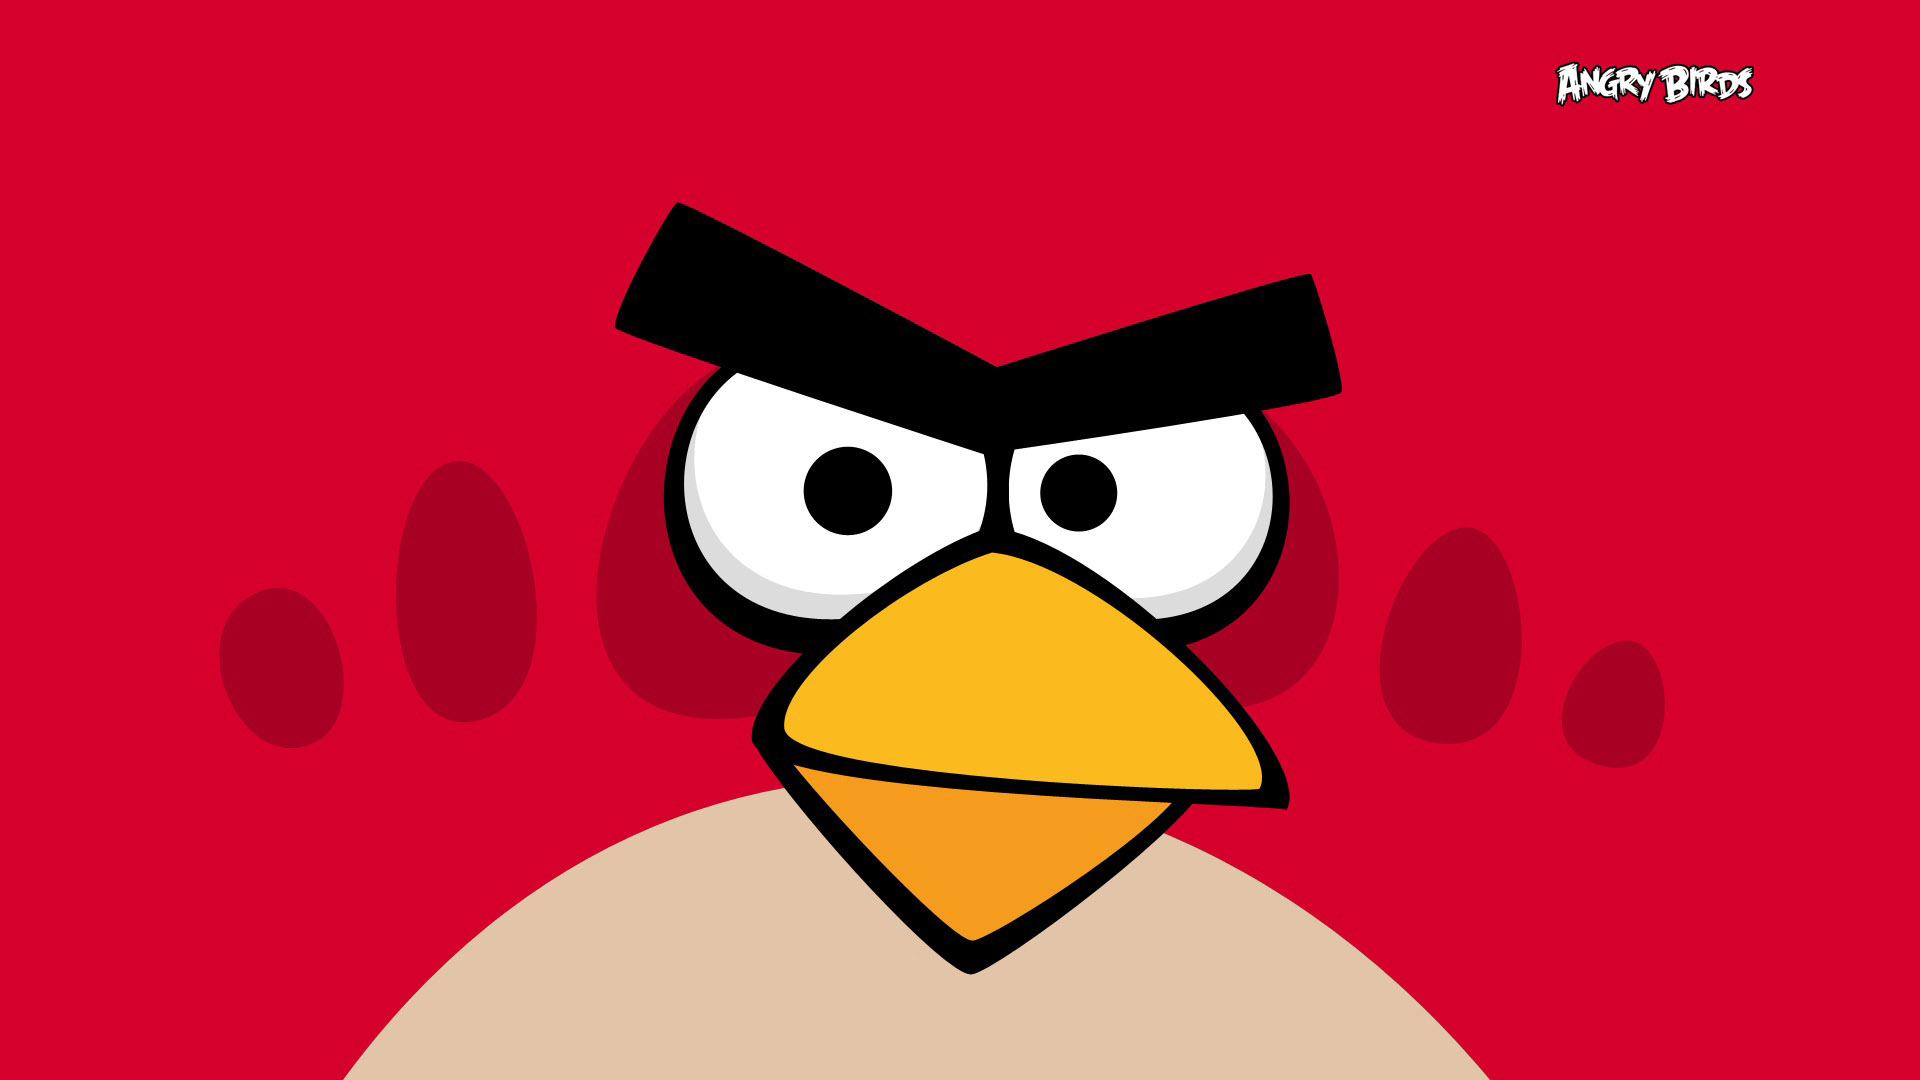 Angry Birds Widescreen Computer Desktop Wallpaper